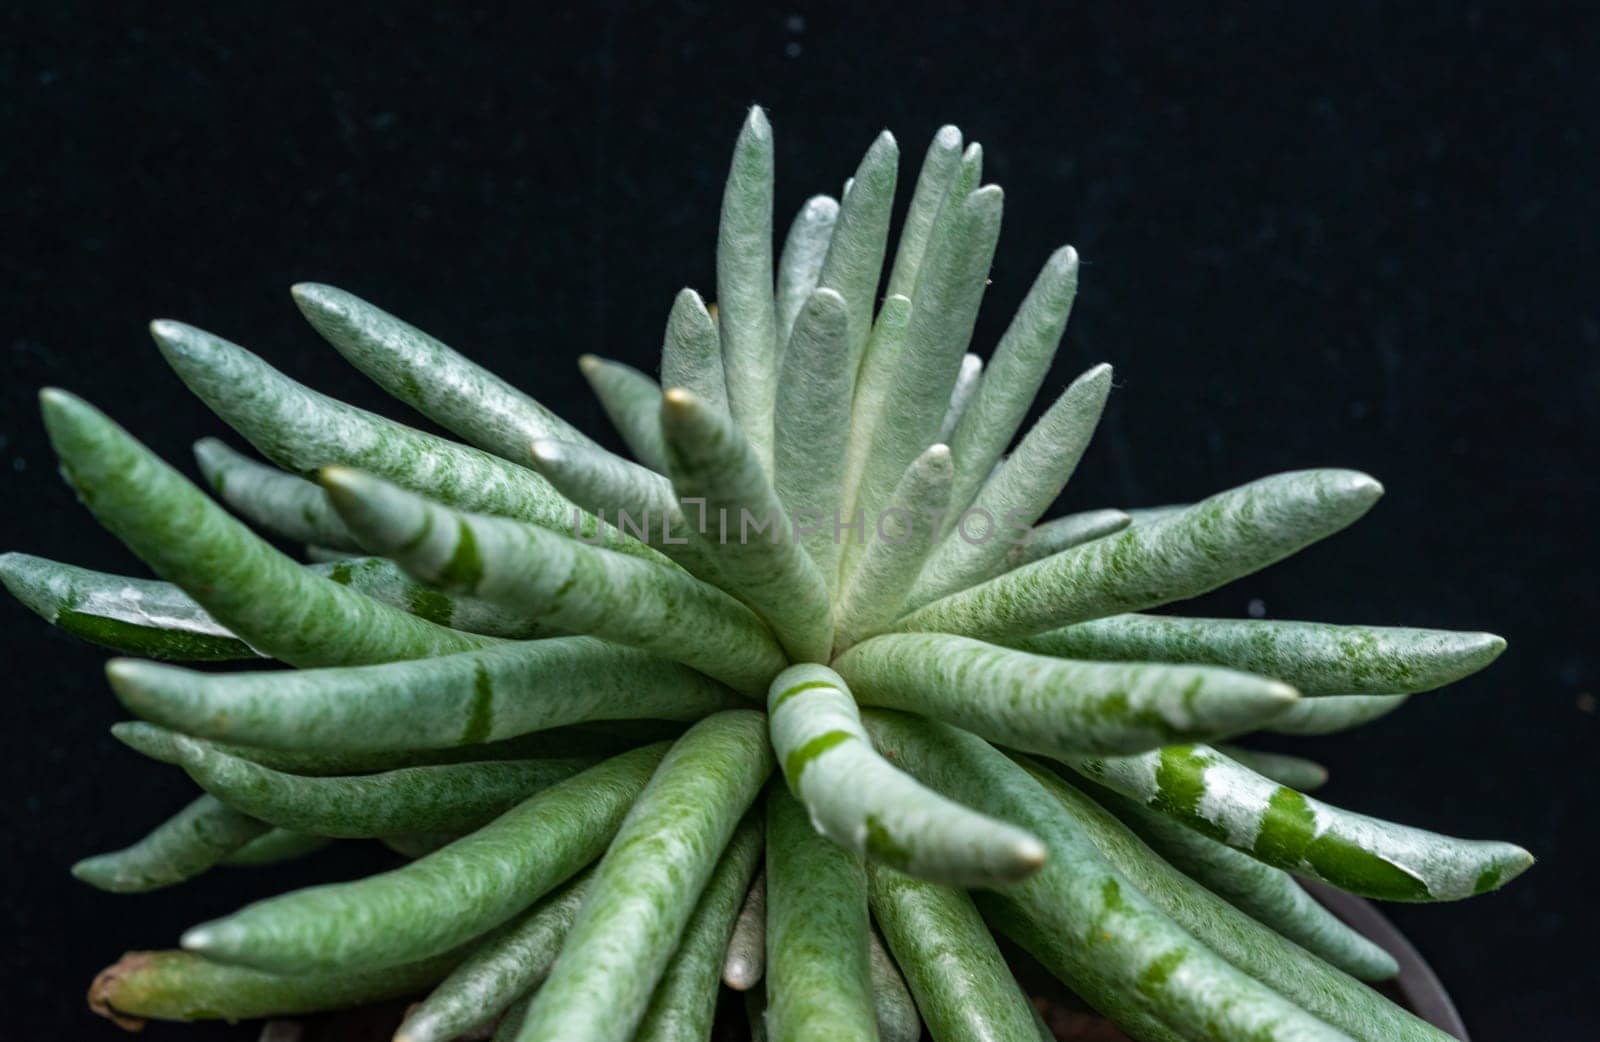 Senecio scaposus - succulent plant with thick succulent leaves by Hydrobiolog